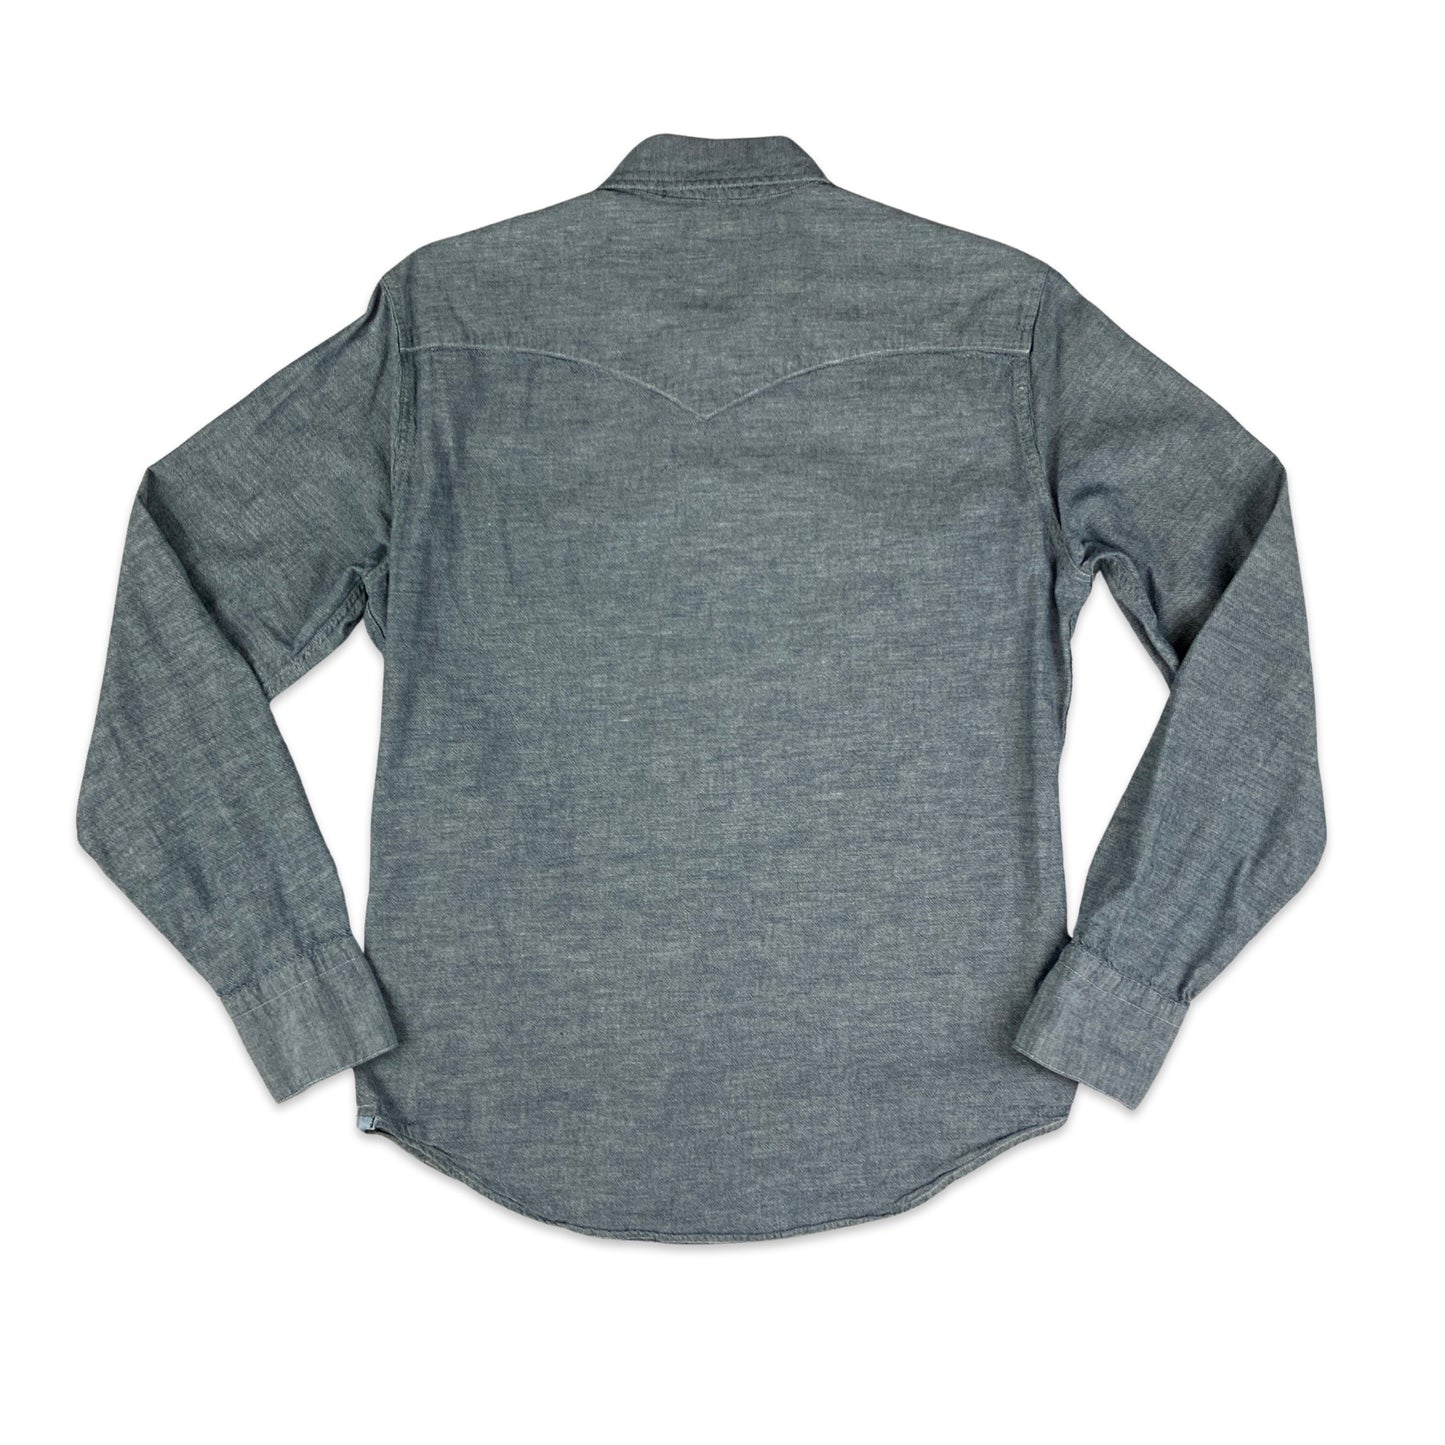 Levi's Grey Chambray Western Style Shirt XS S